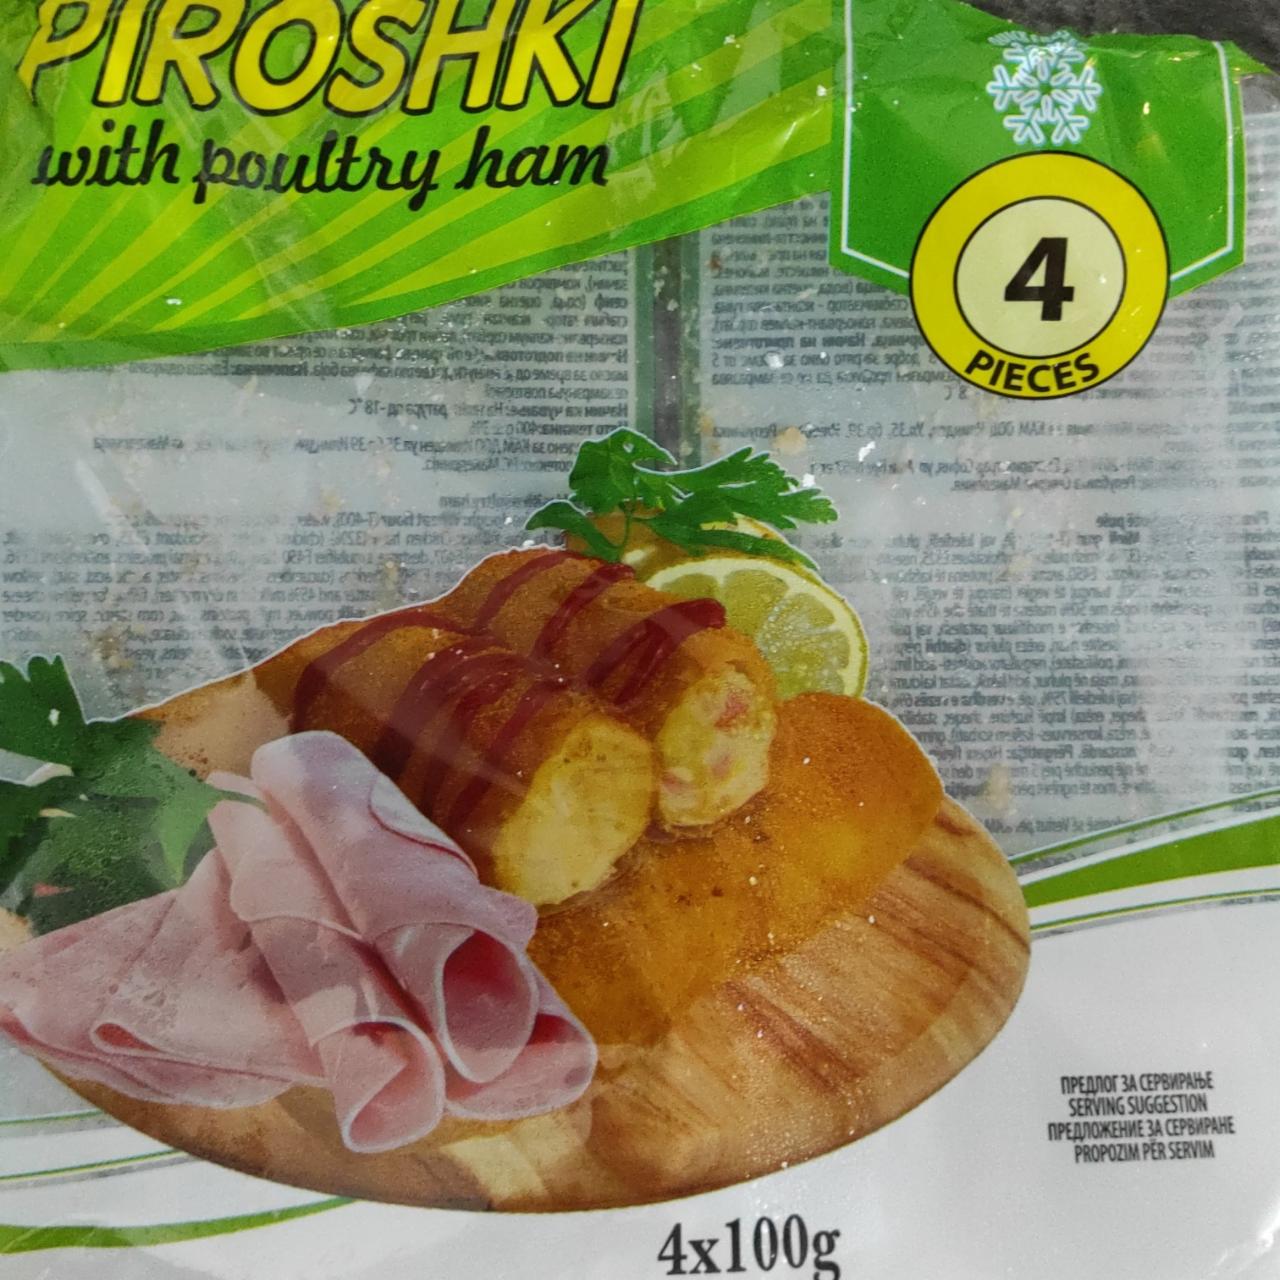 Fotografie - Piroshki with poultry ham